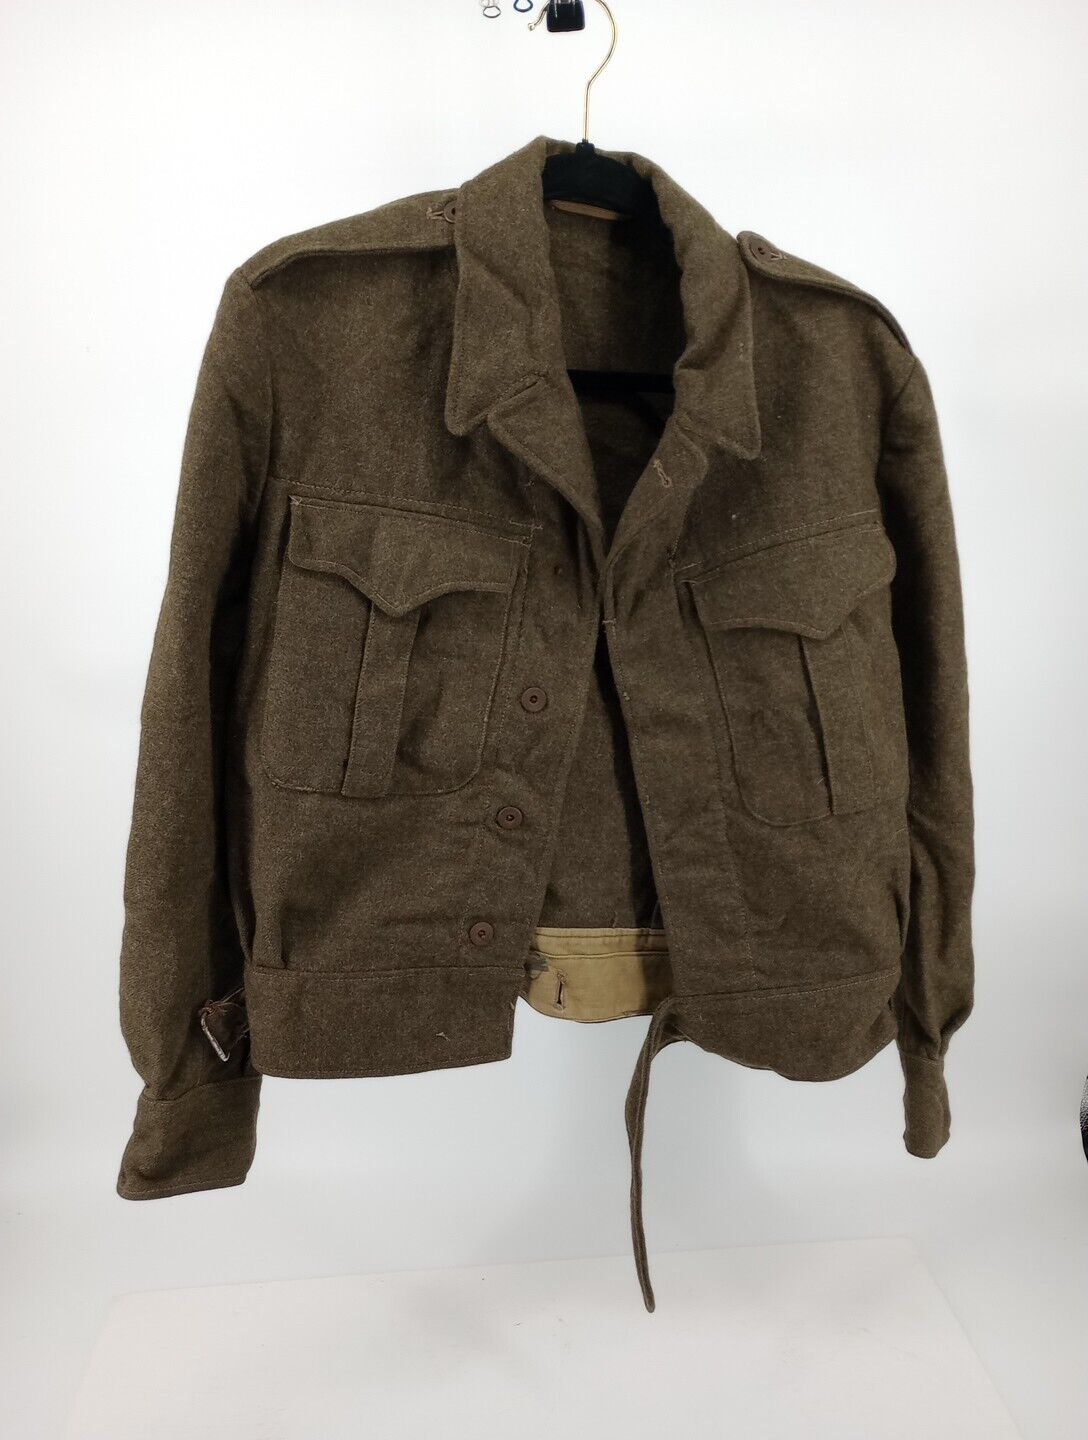 VTG 1955 US Army Sage Green Sergeant Battledress Blouse Uniform Jacket Size 6 